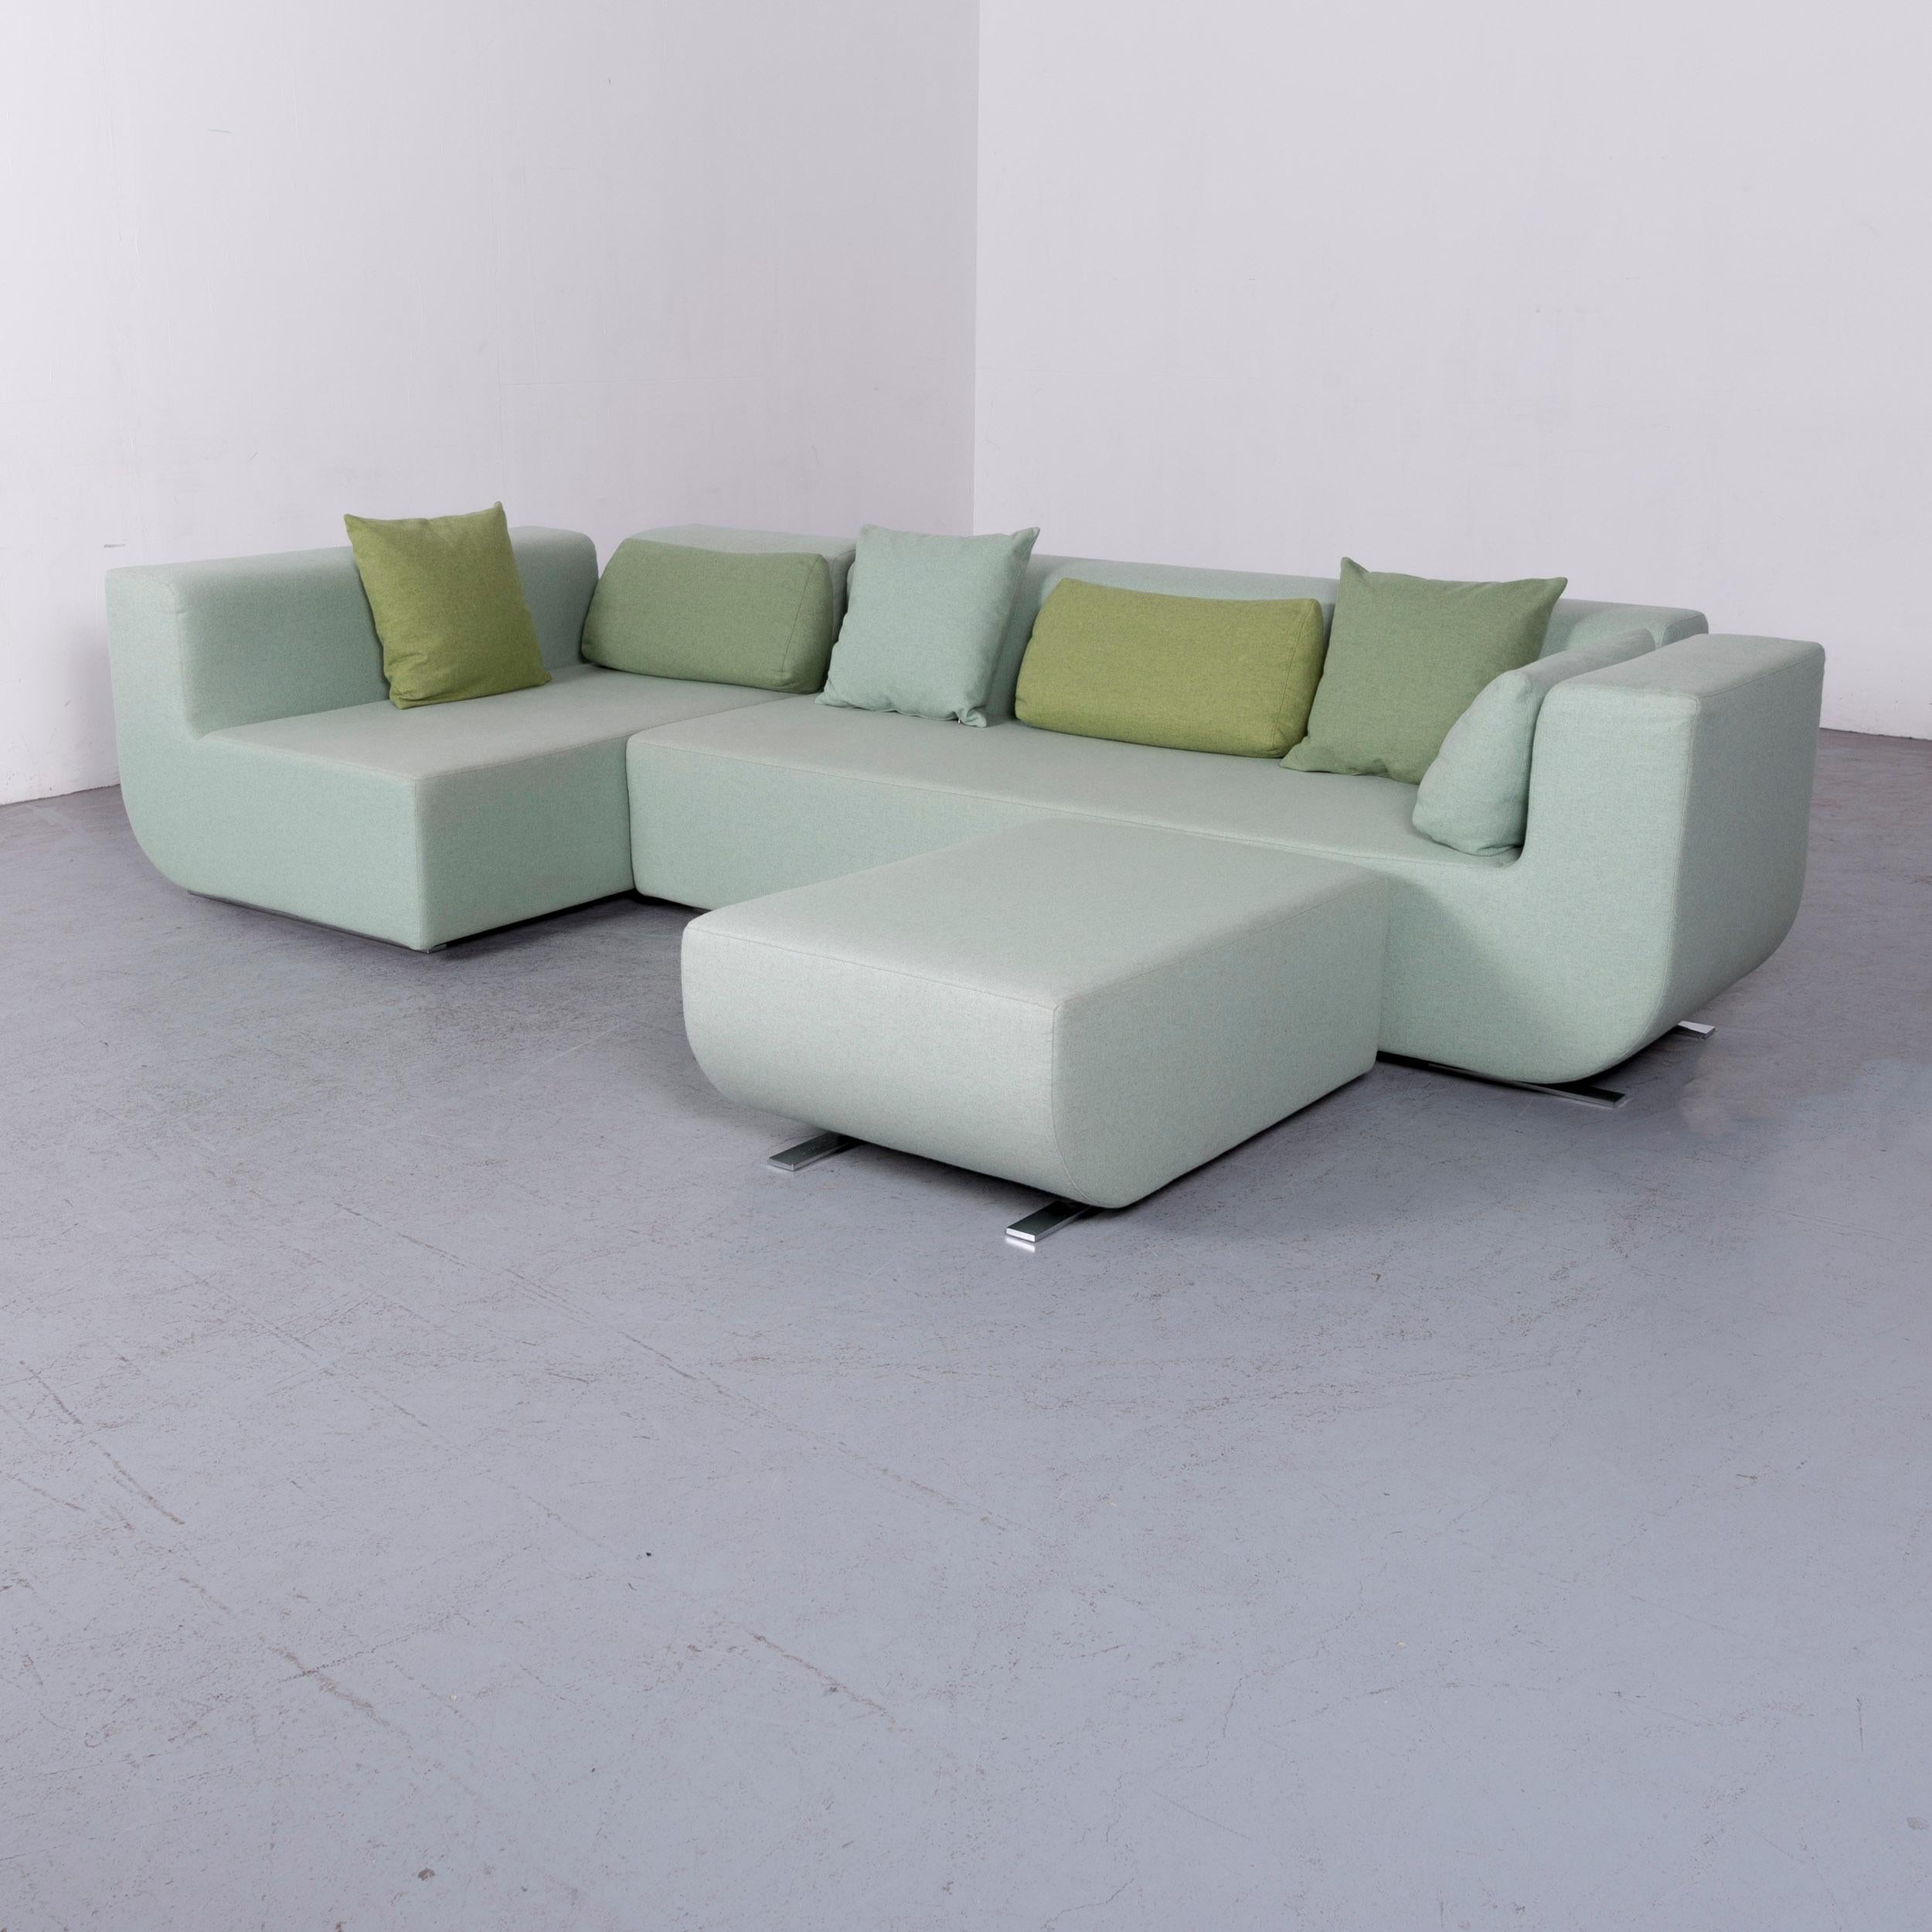 We bring to you a COR Nuba designer fabric sofa green corner couch.
















